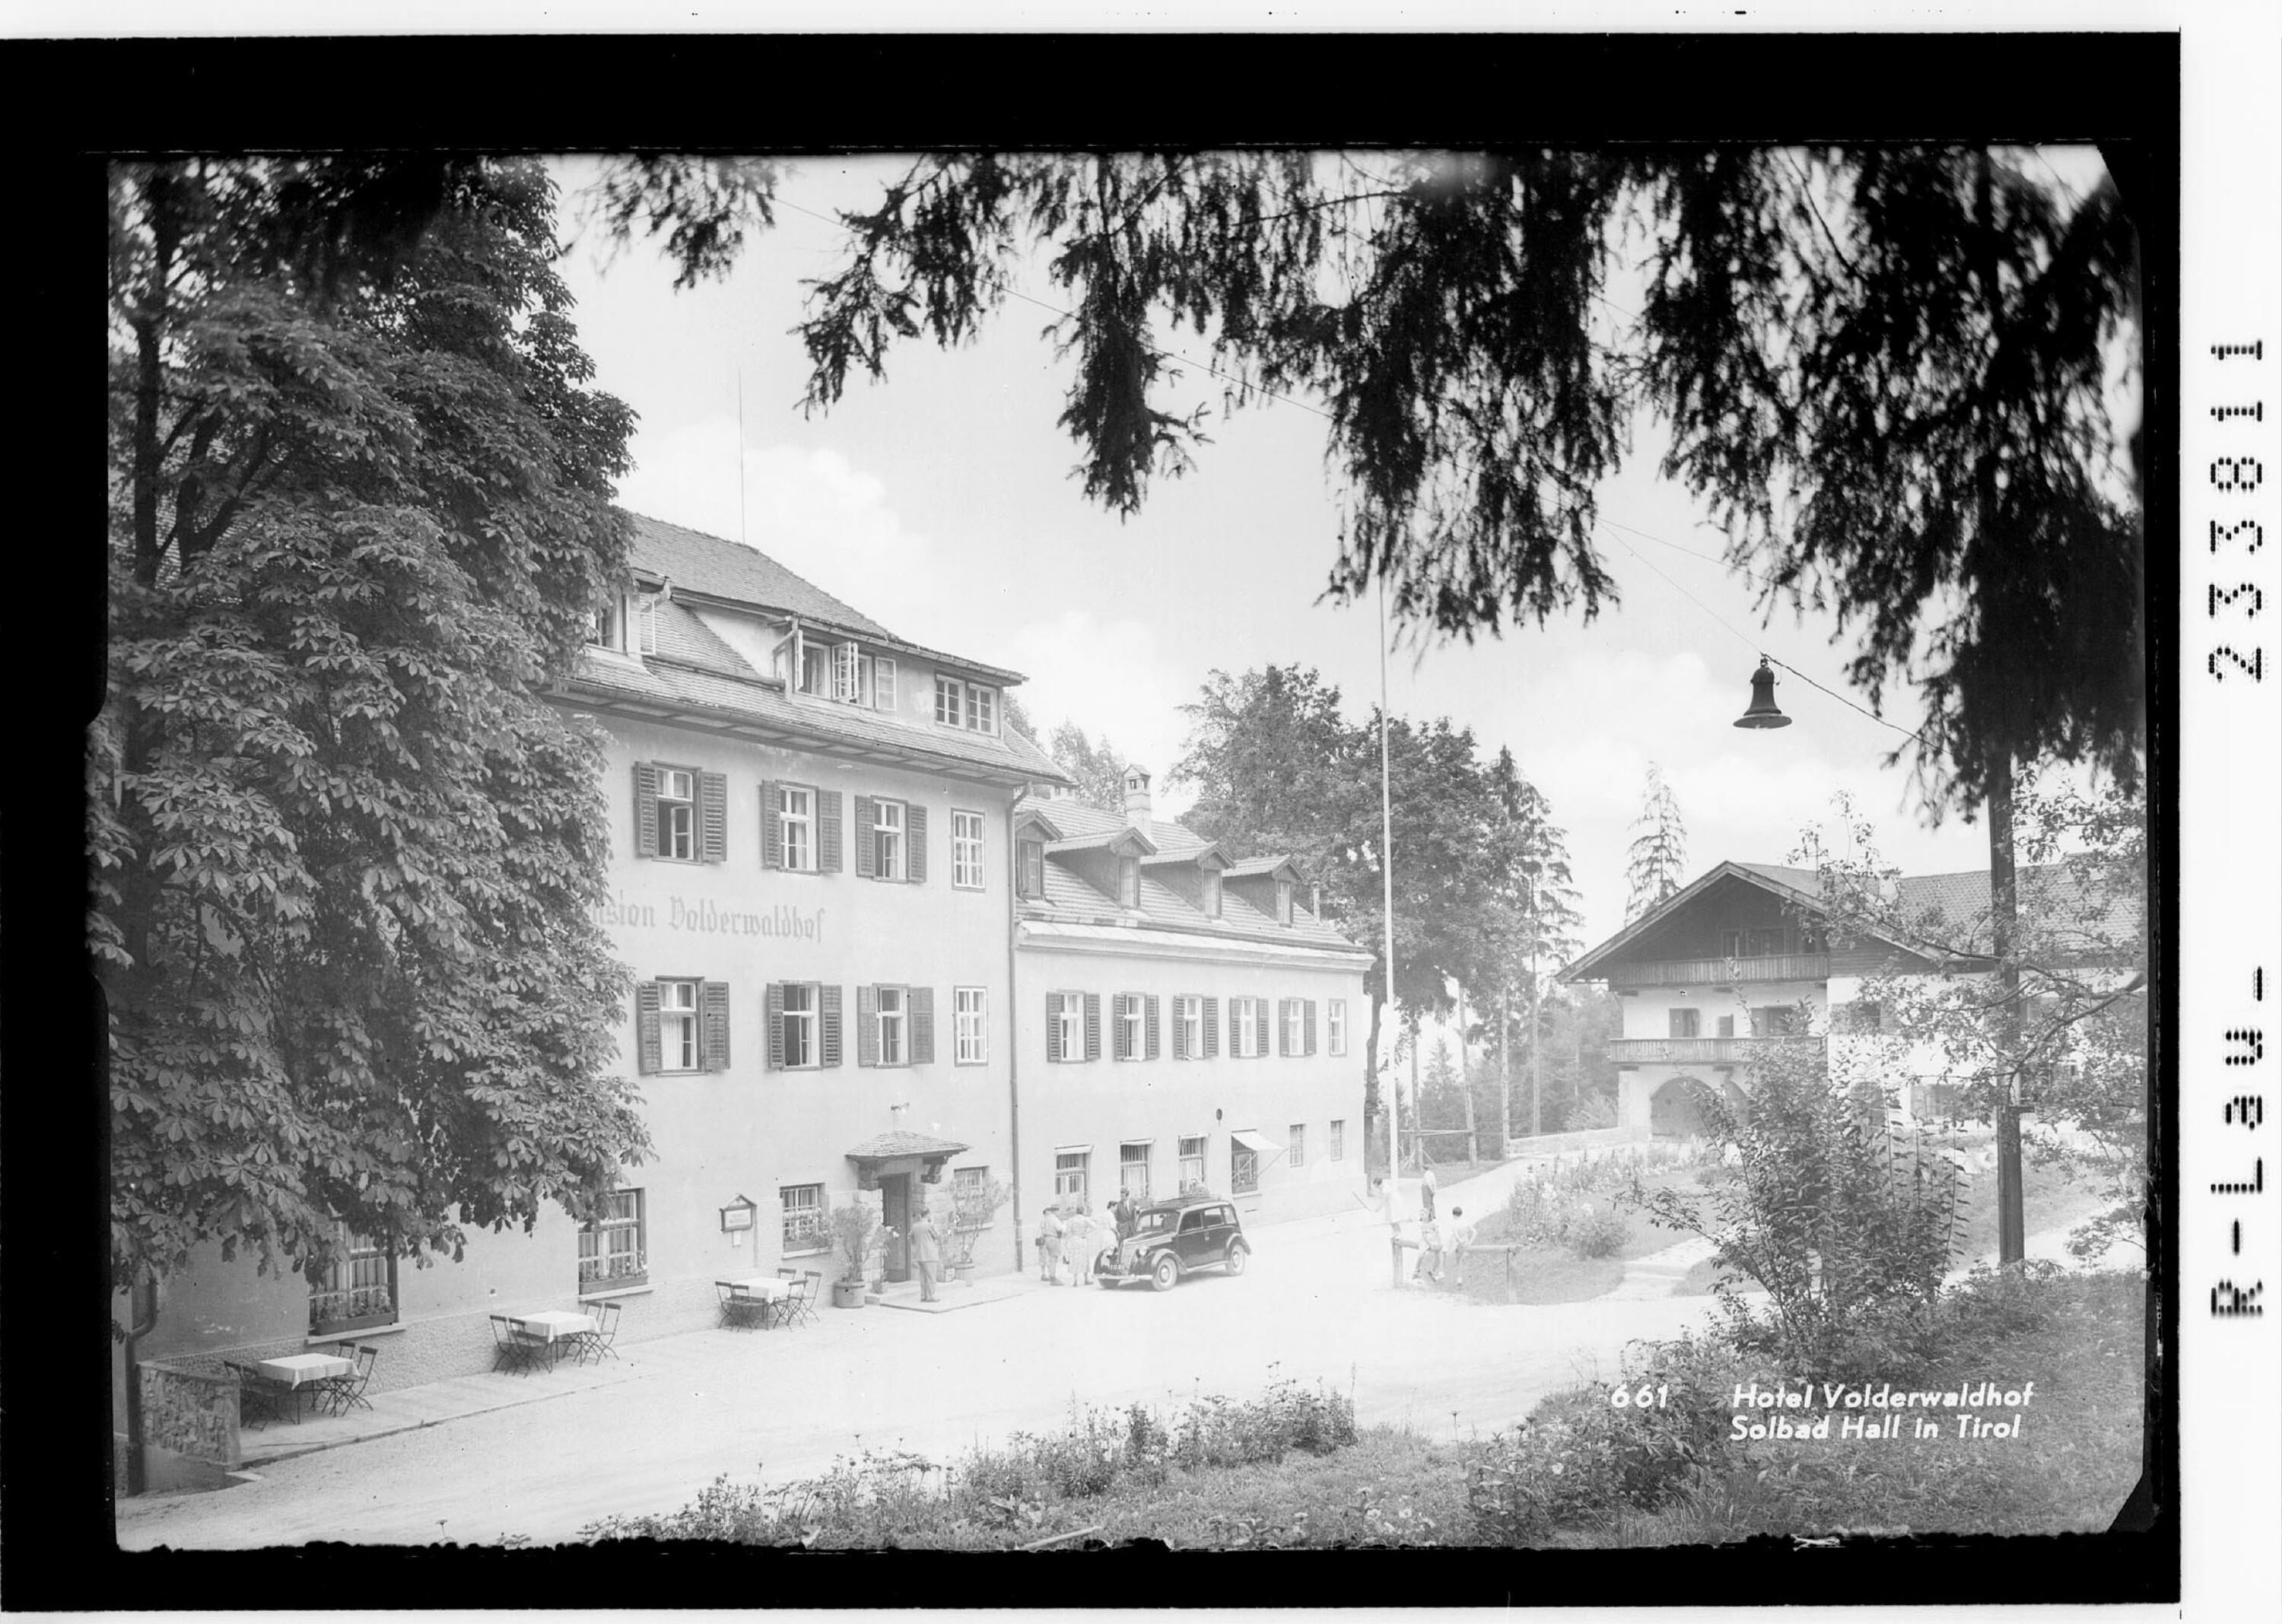 Hotel Volderwaldhof, Solbad Hall in Tirol></div>


    <hr>
    <div class=